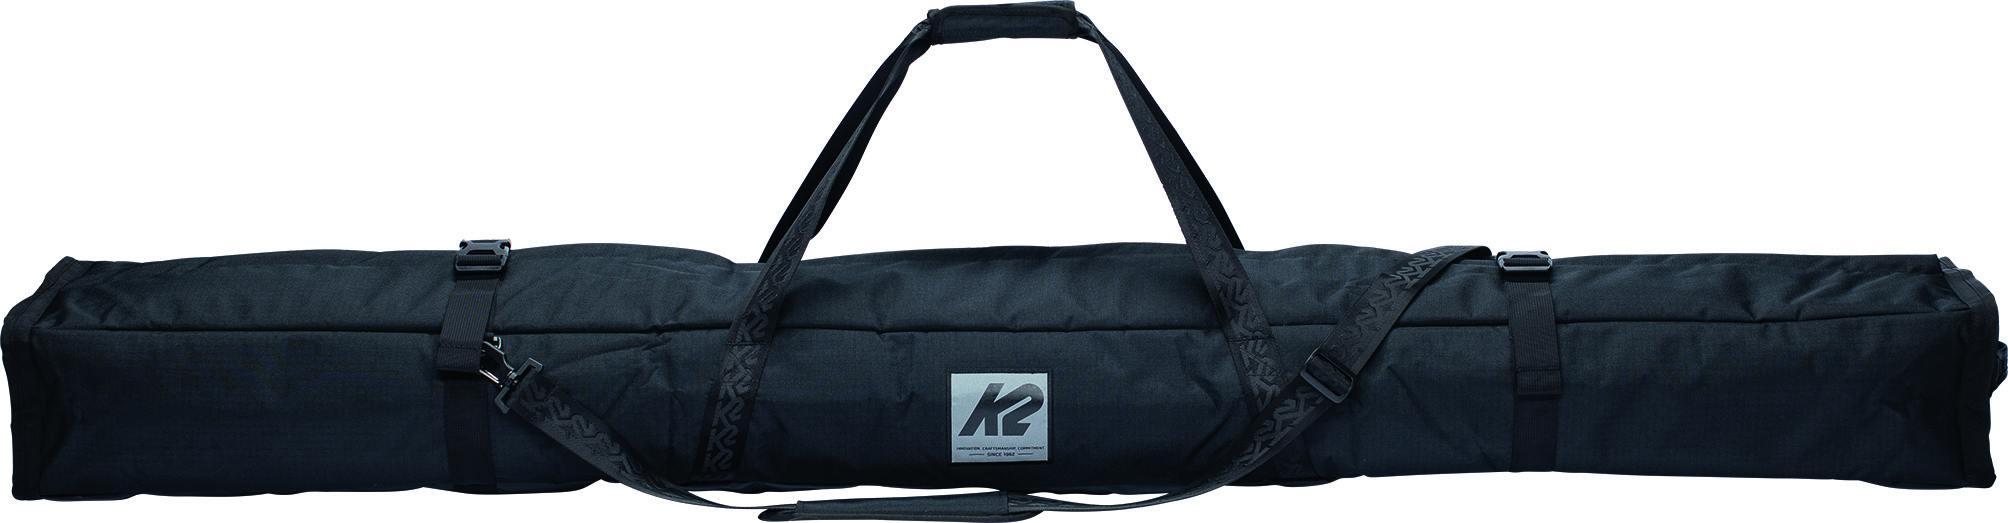 Details about   K2 Double 175 Ski Bag 